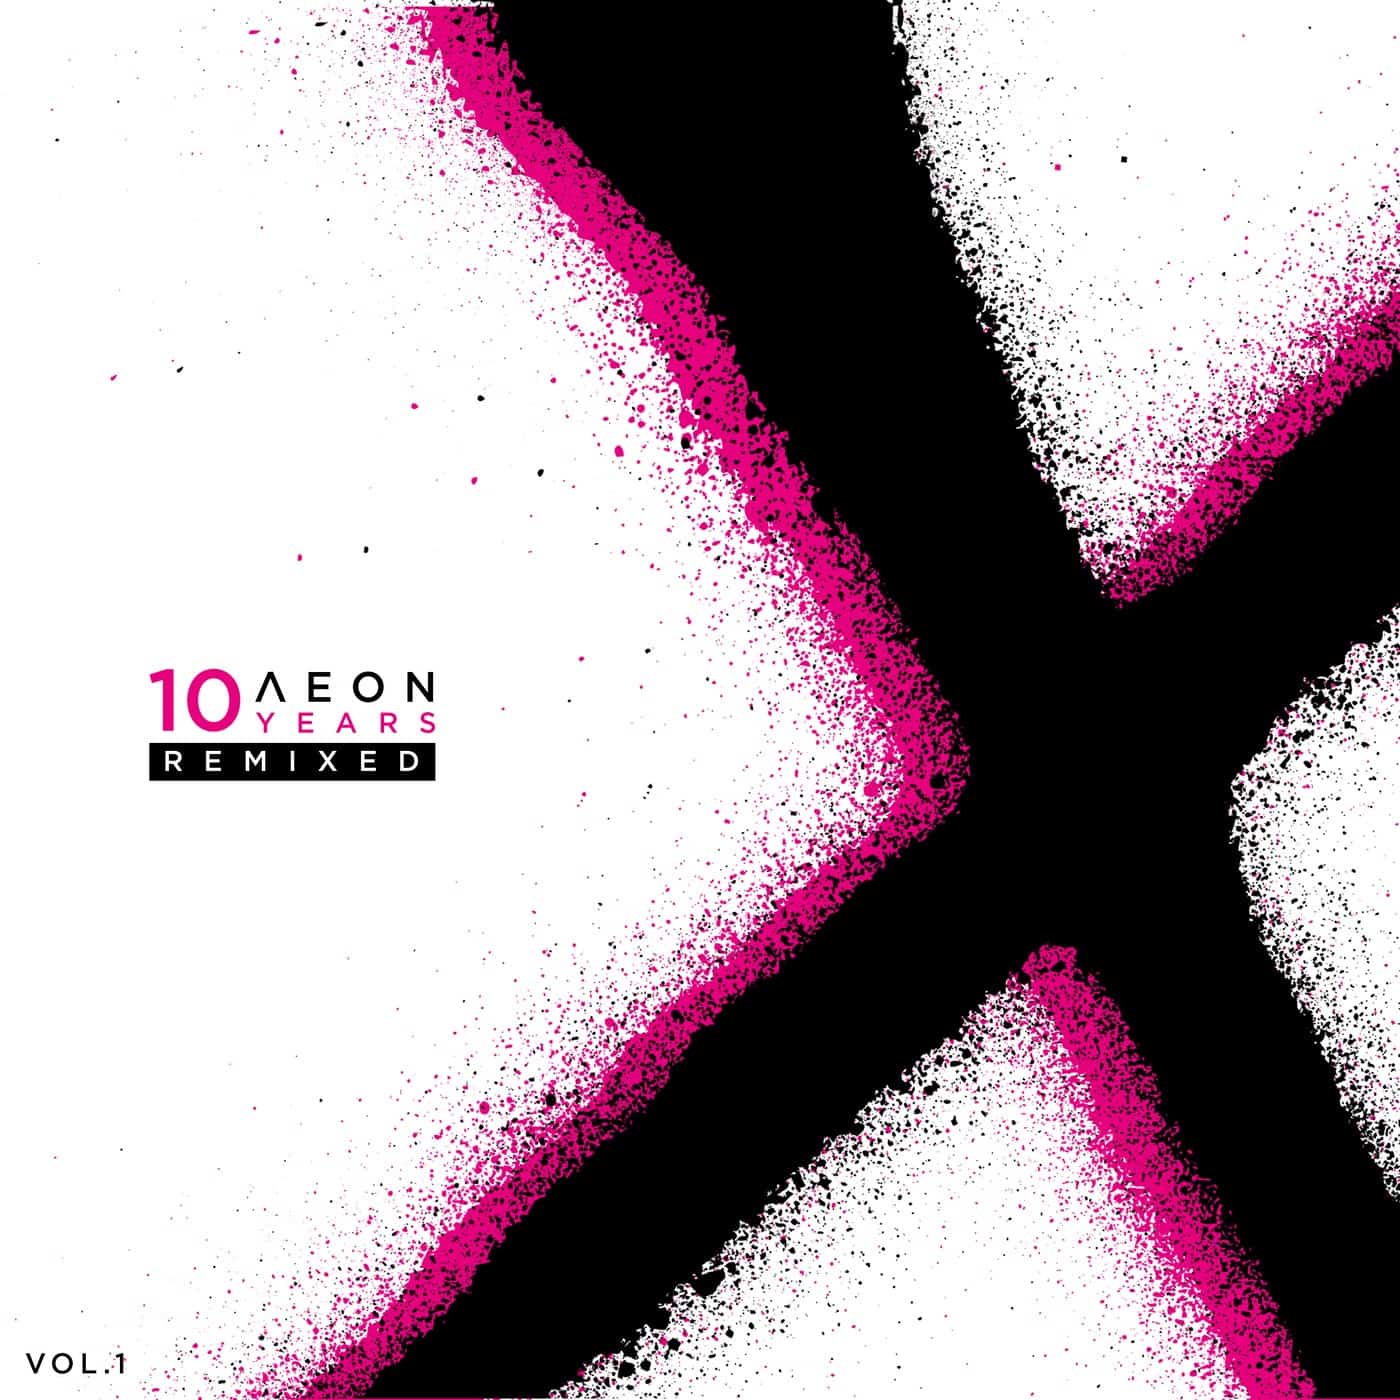 image cover: VA - AEON X - Remixed Vol. 1 on Aeon